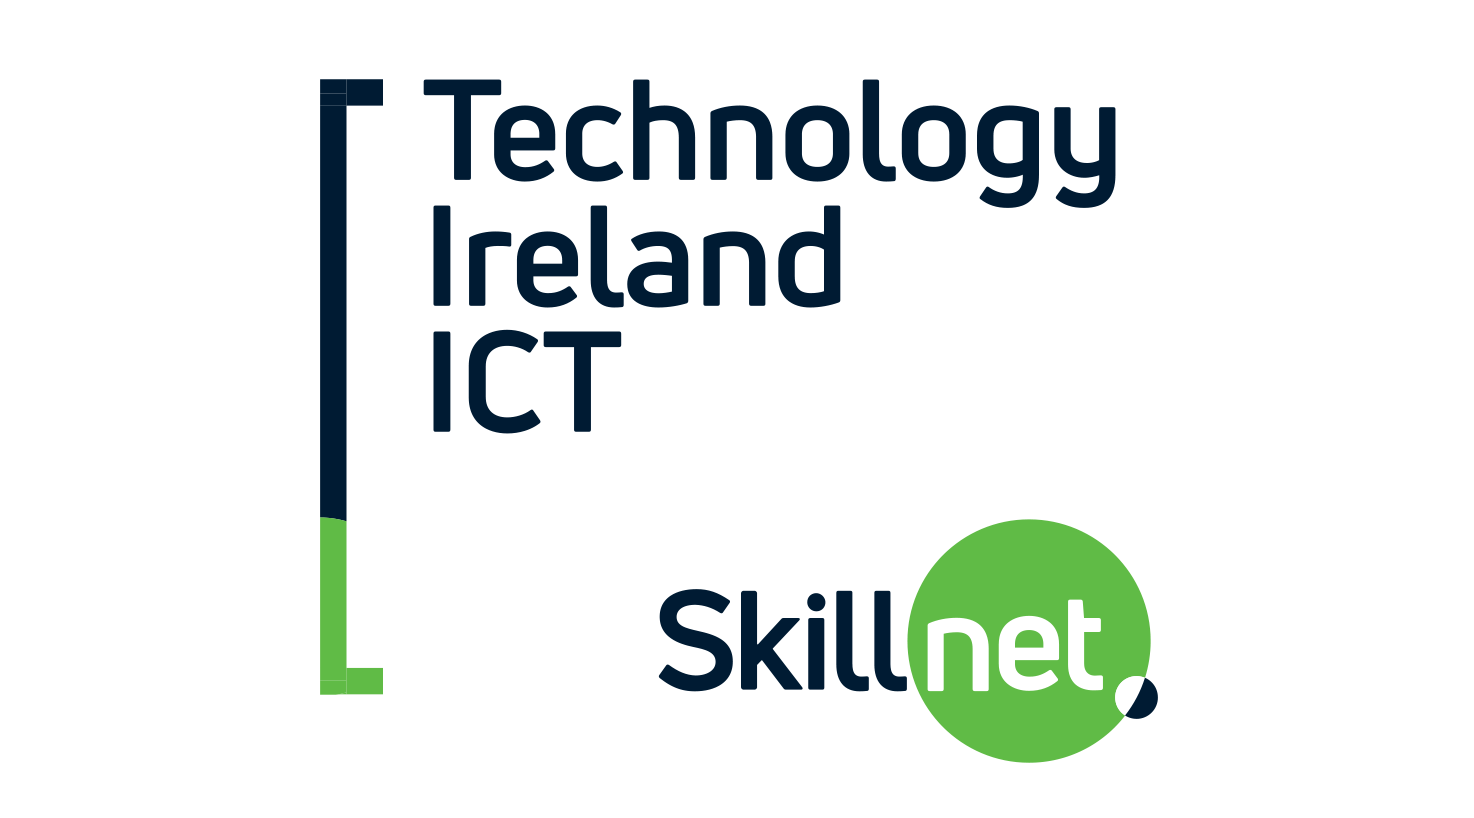 Technology Ireland ICT Skillnet